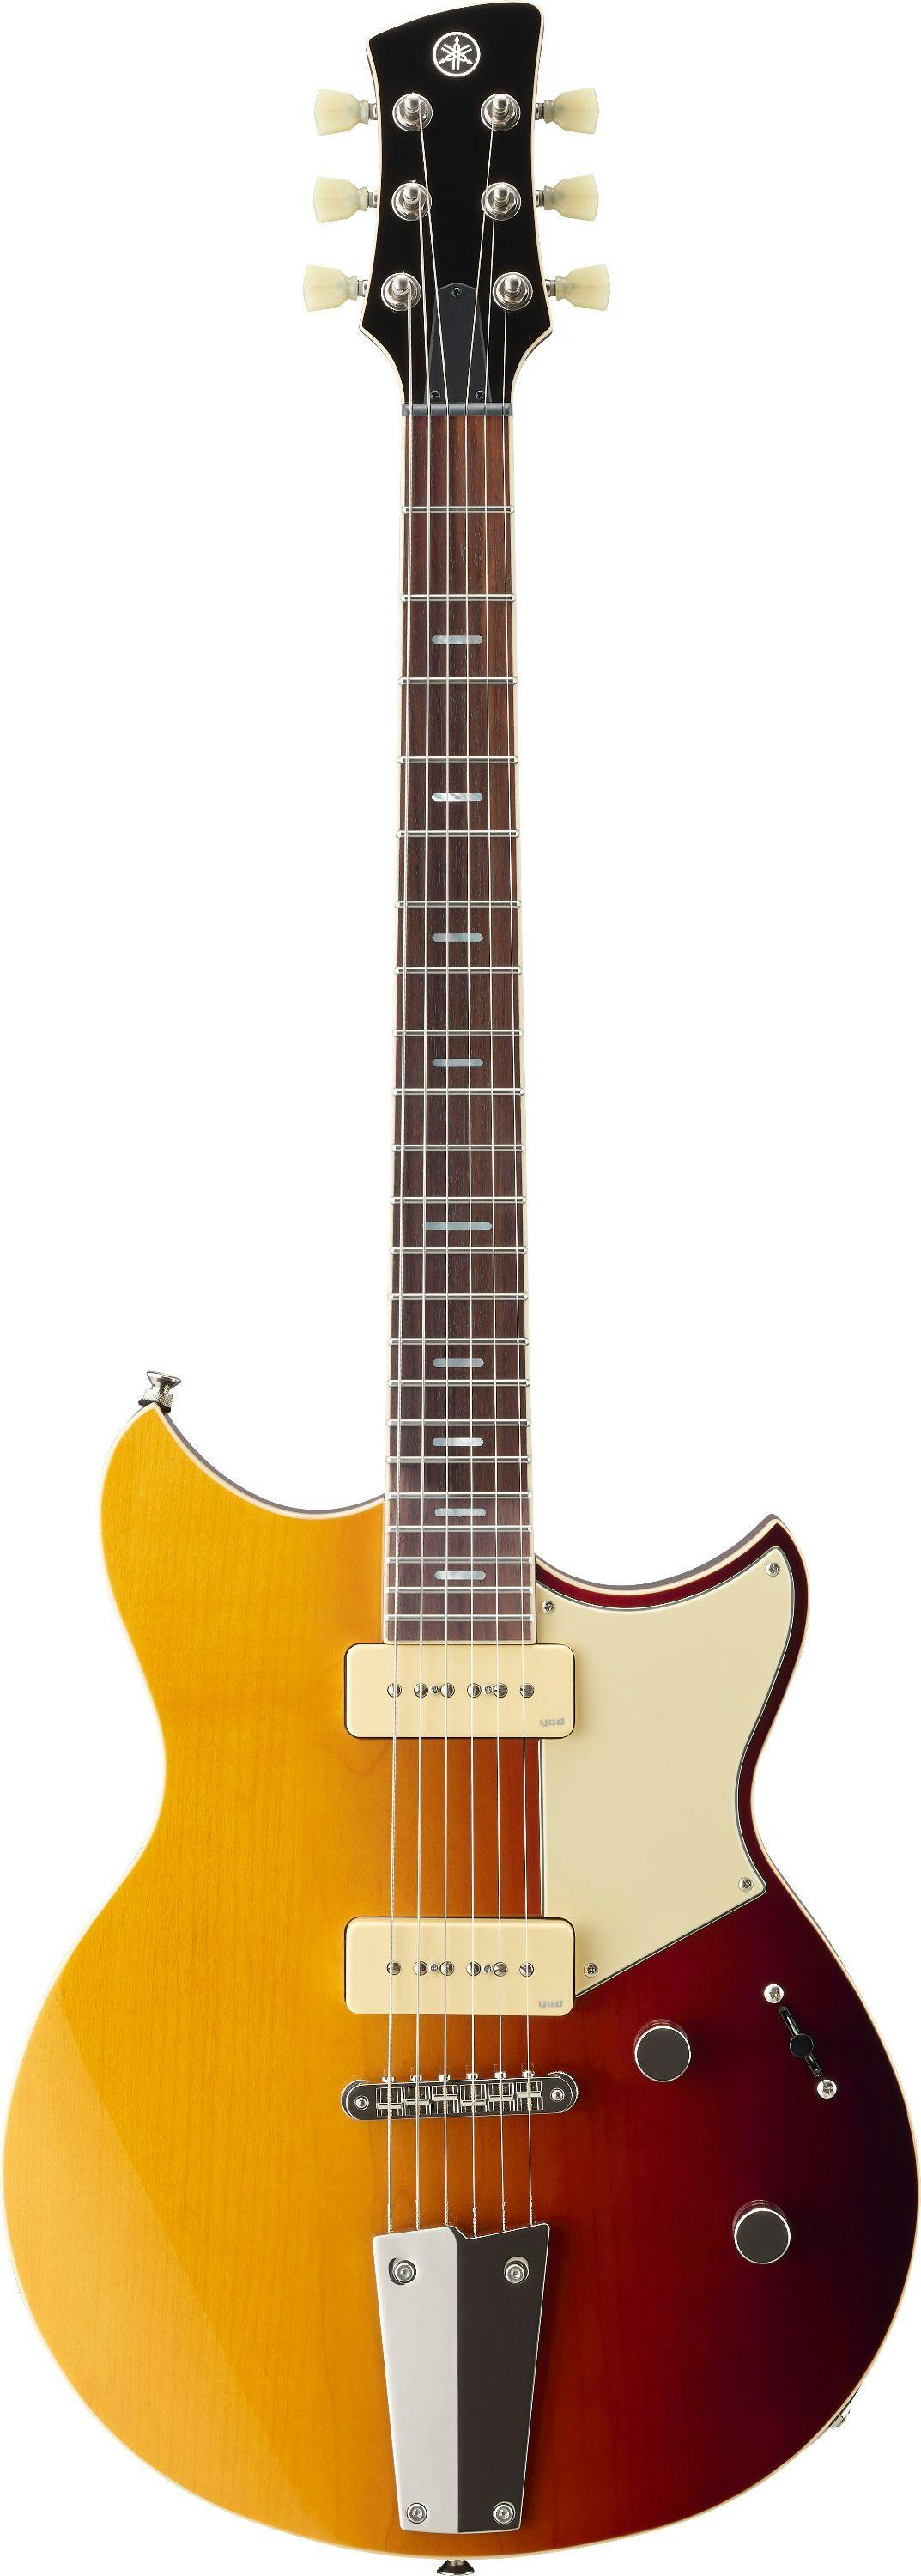 Yamaha Revstar Standard RSS02T Electric Guitar in Sunset Burst - Andertons  Music Co.